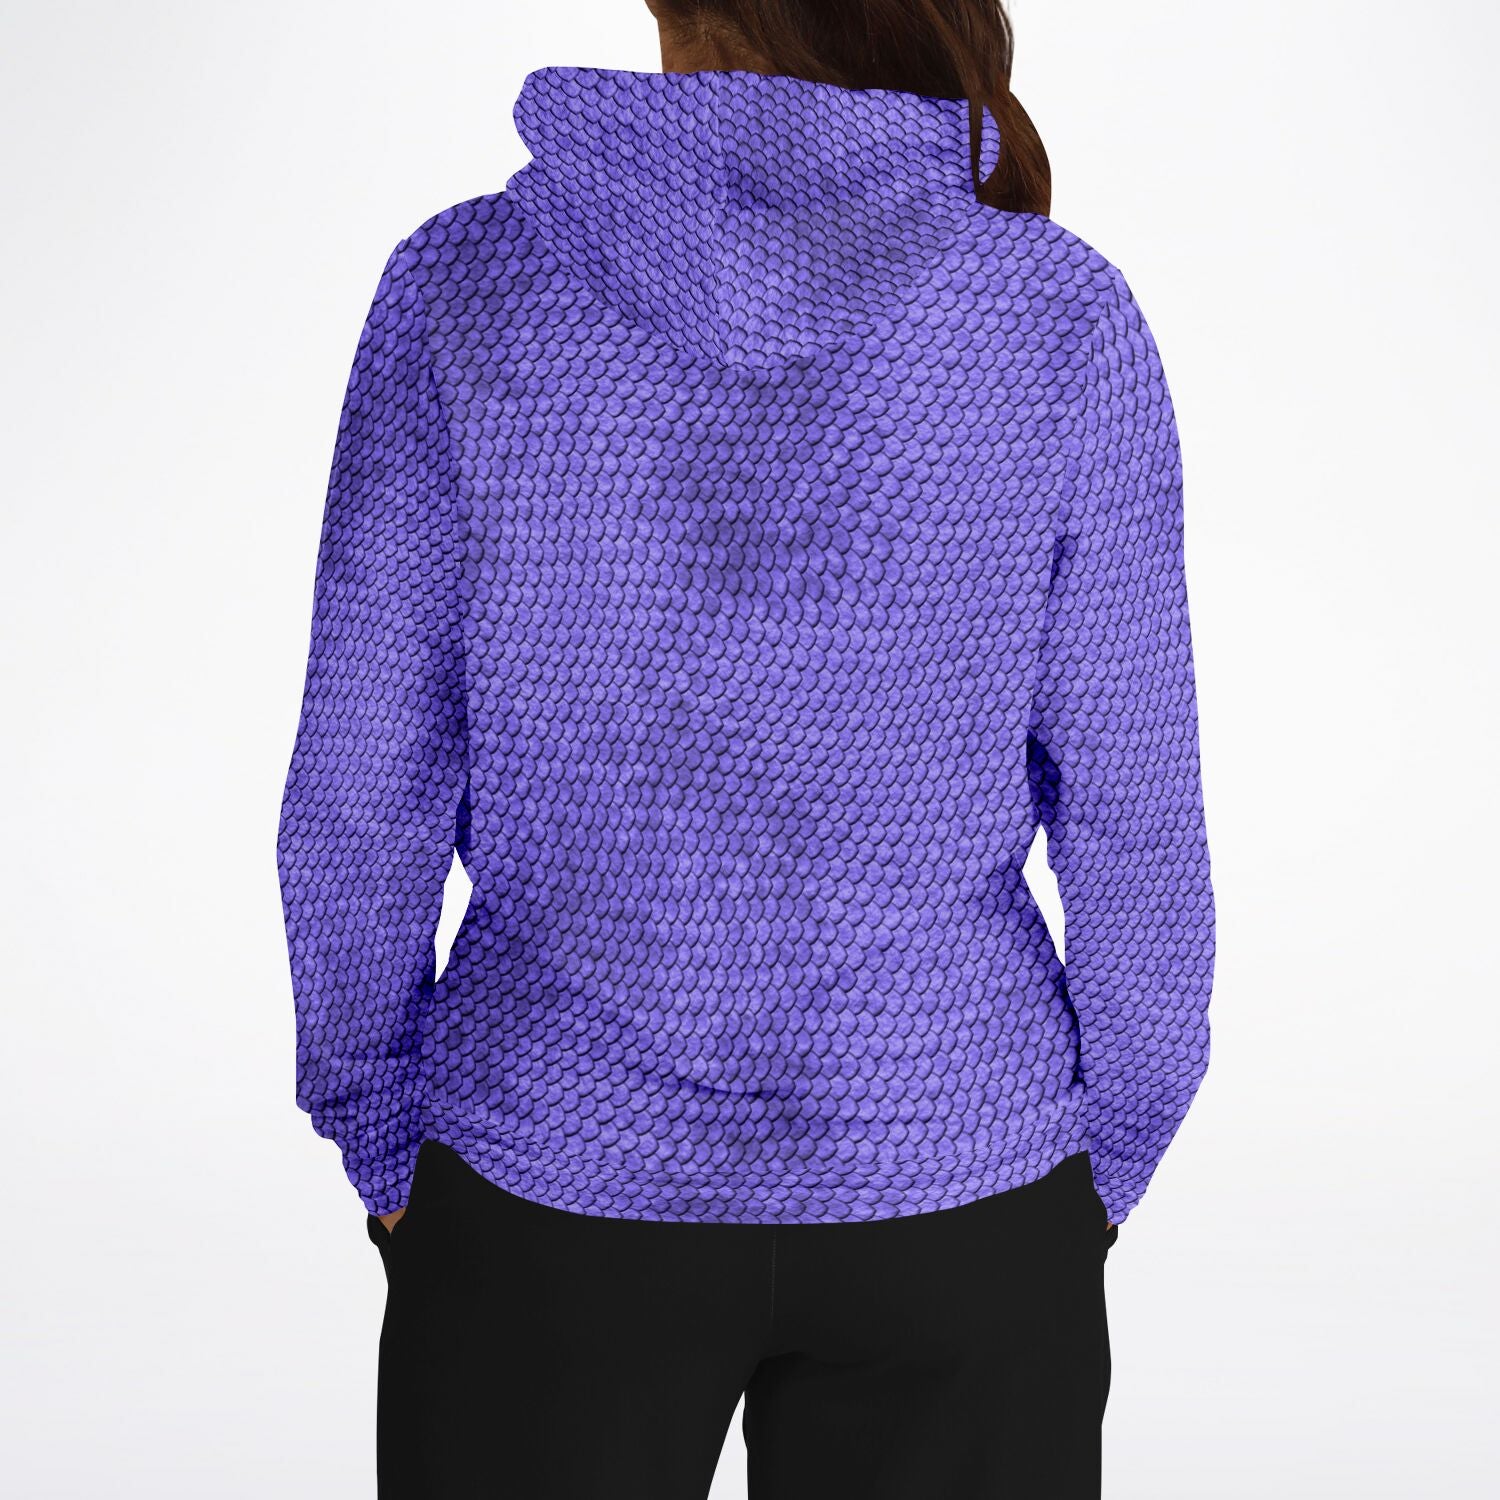 Fashionable purple sweatshirt with hood by Elivior